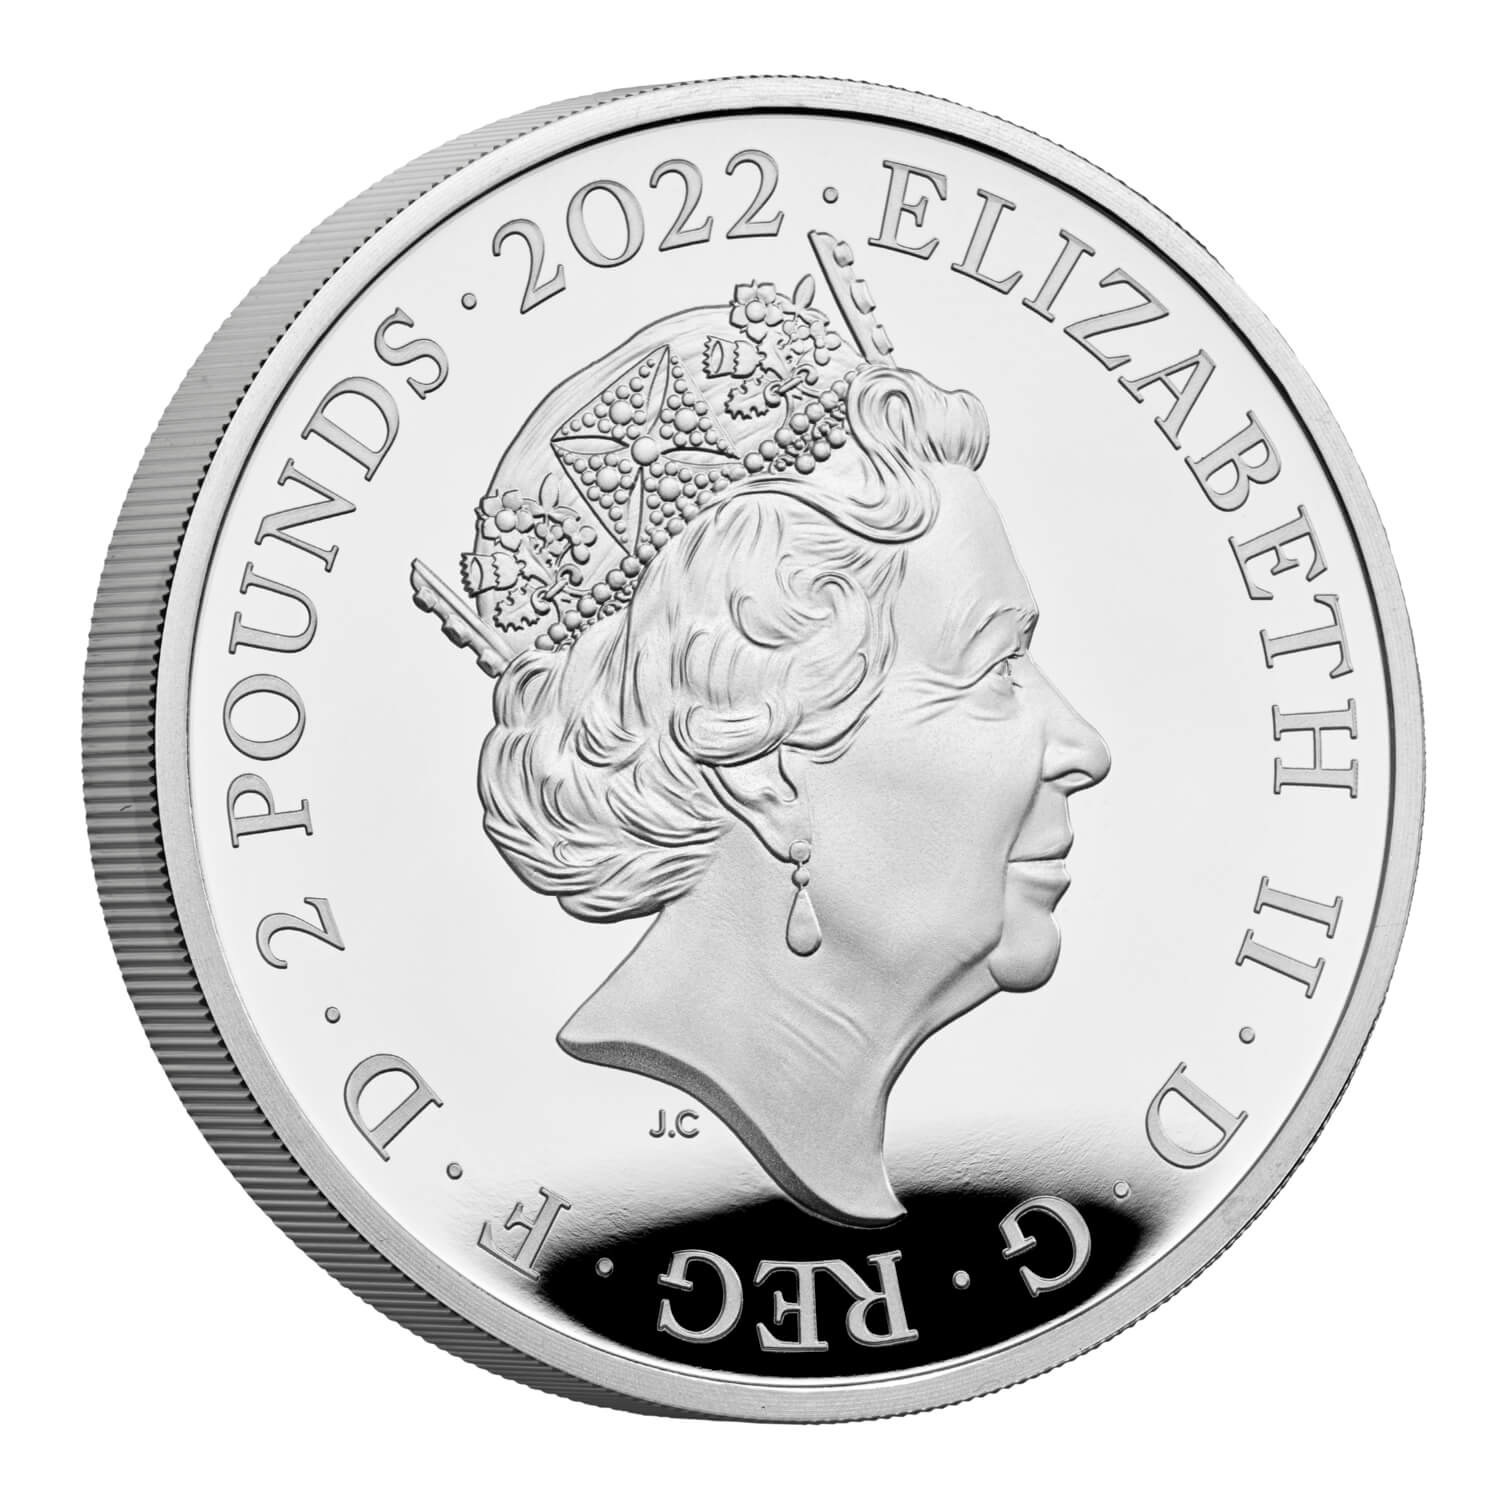 (W185.2.P.2022.UK22E7S1O) 2 Pounds UK 2022 1 oz Proof silver - King Edward VII Obverse (zoom)